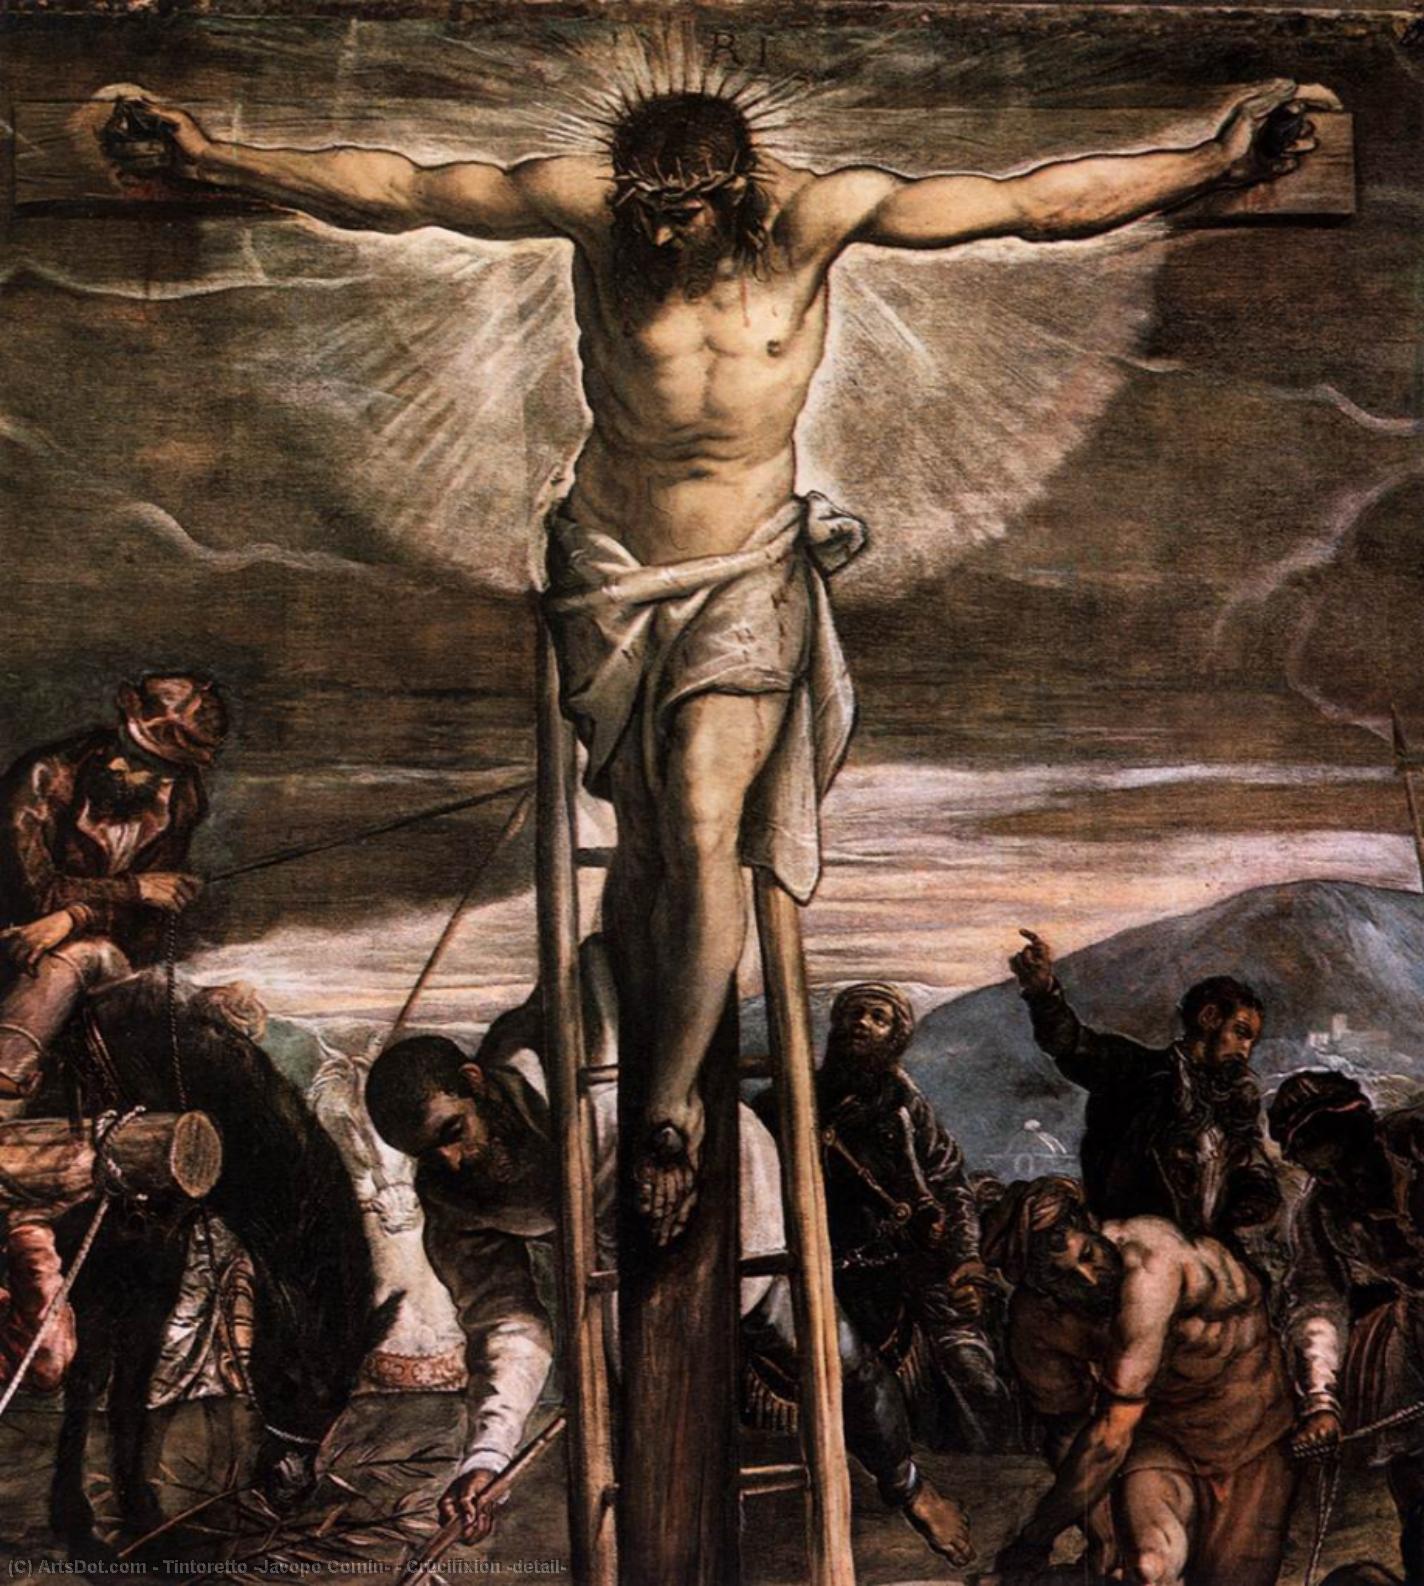 WikiOO.org - Enciclopédia das Belas Artes - Pintura, Arte por Tintoretto (Jacopo Comin) - Crucifixion (detail)